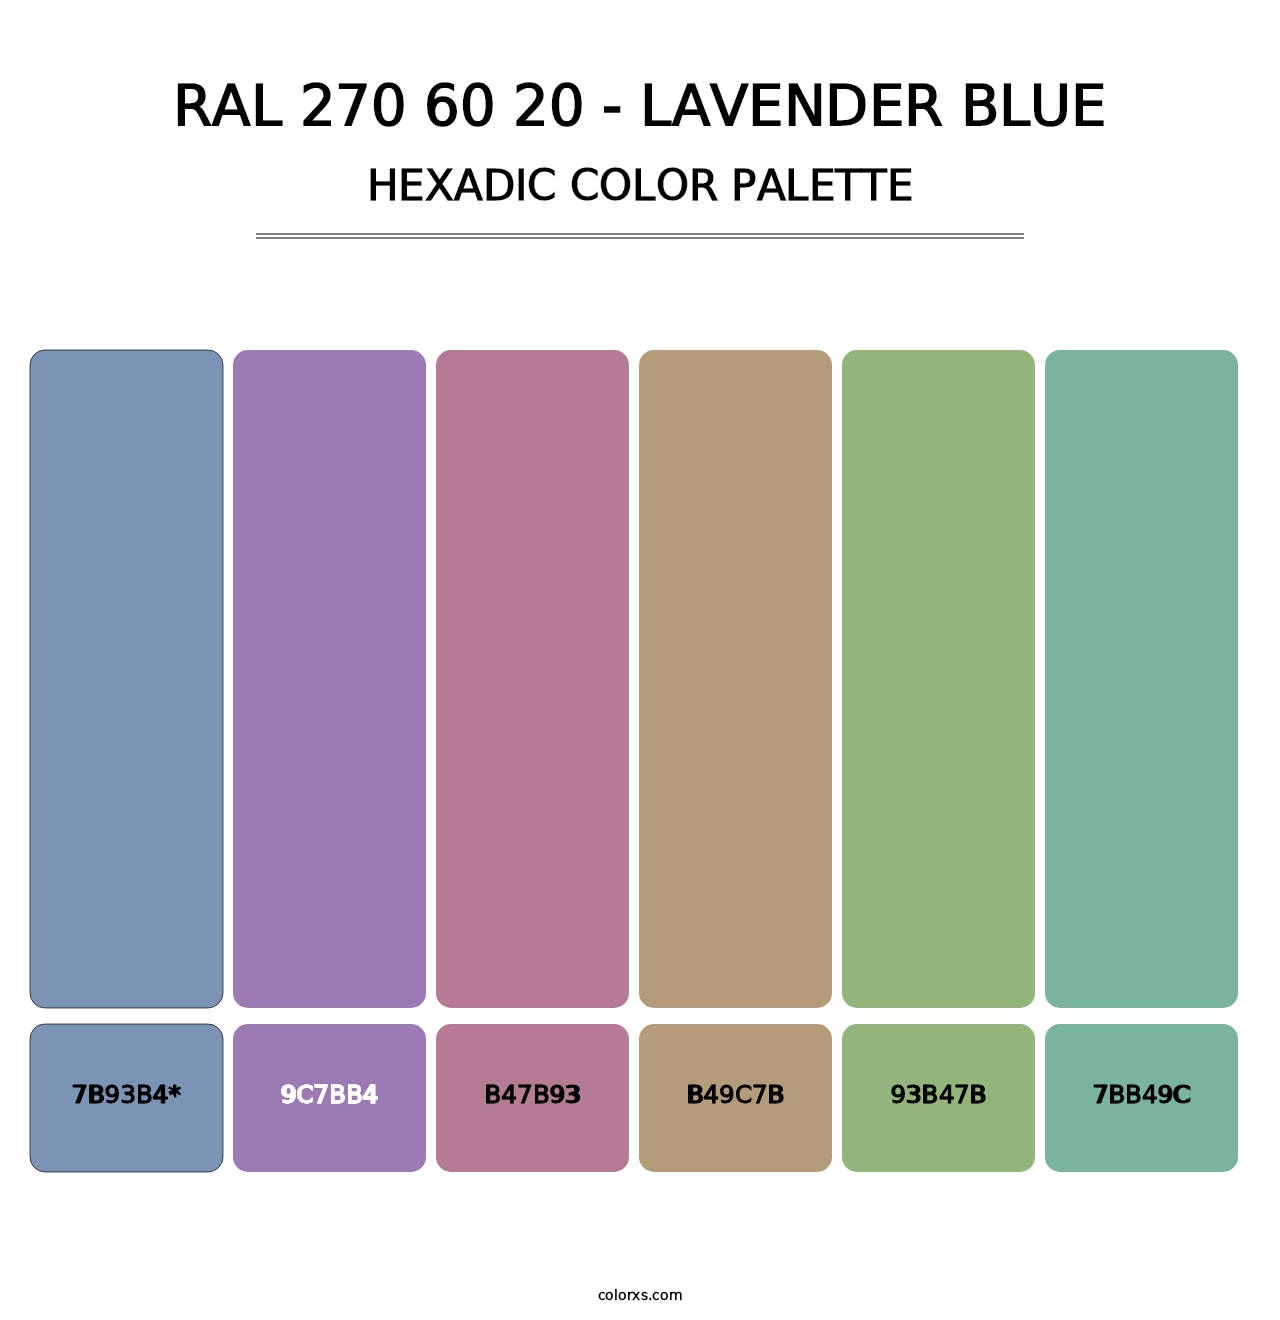 RAL 270 60 20 - Lavender Blue - Hexadic Color Palette